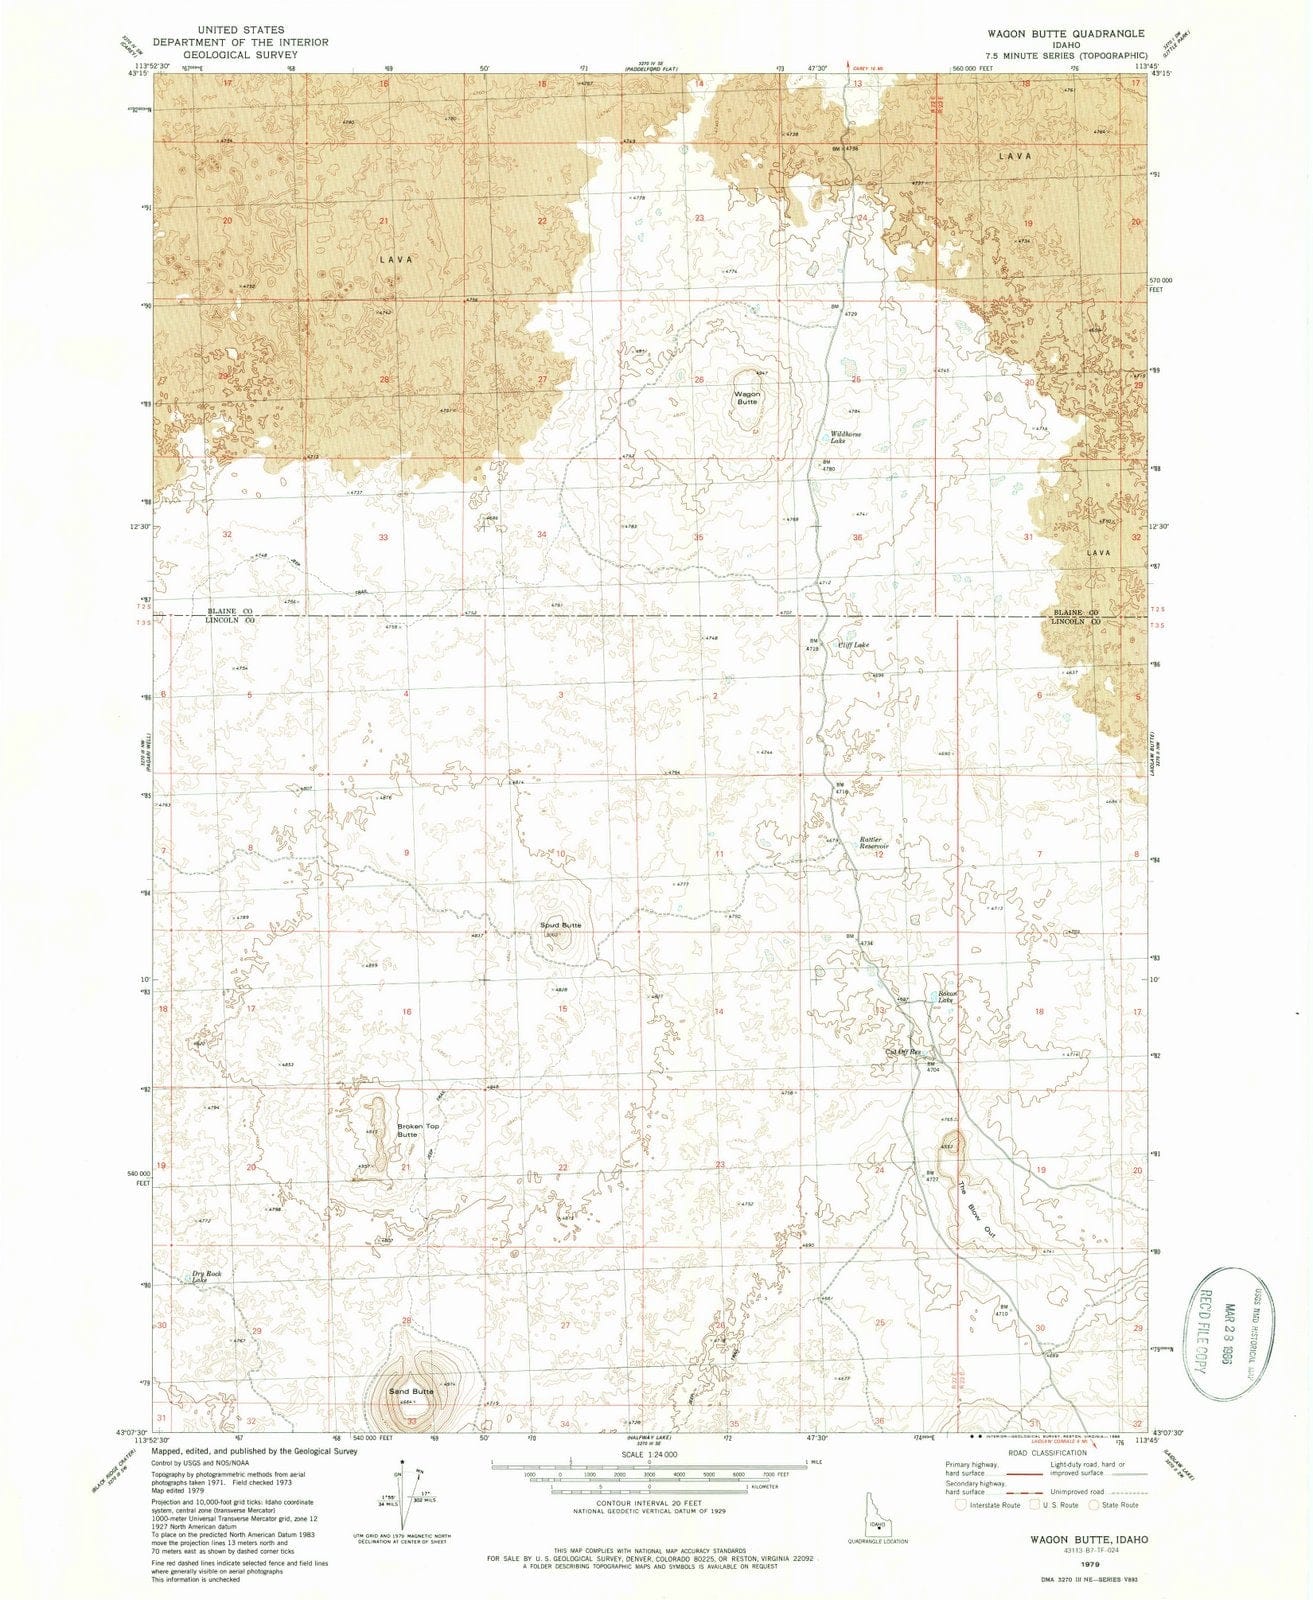 1979 Wagon Butte, ID - Idaho - USGS Topographic Map